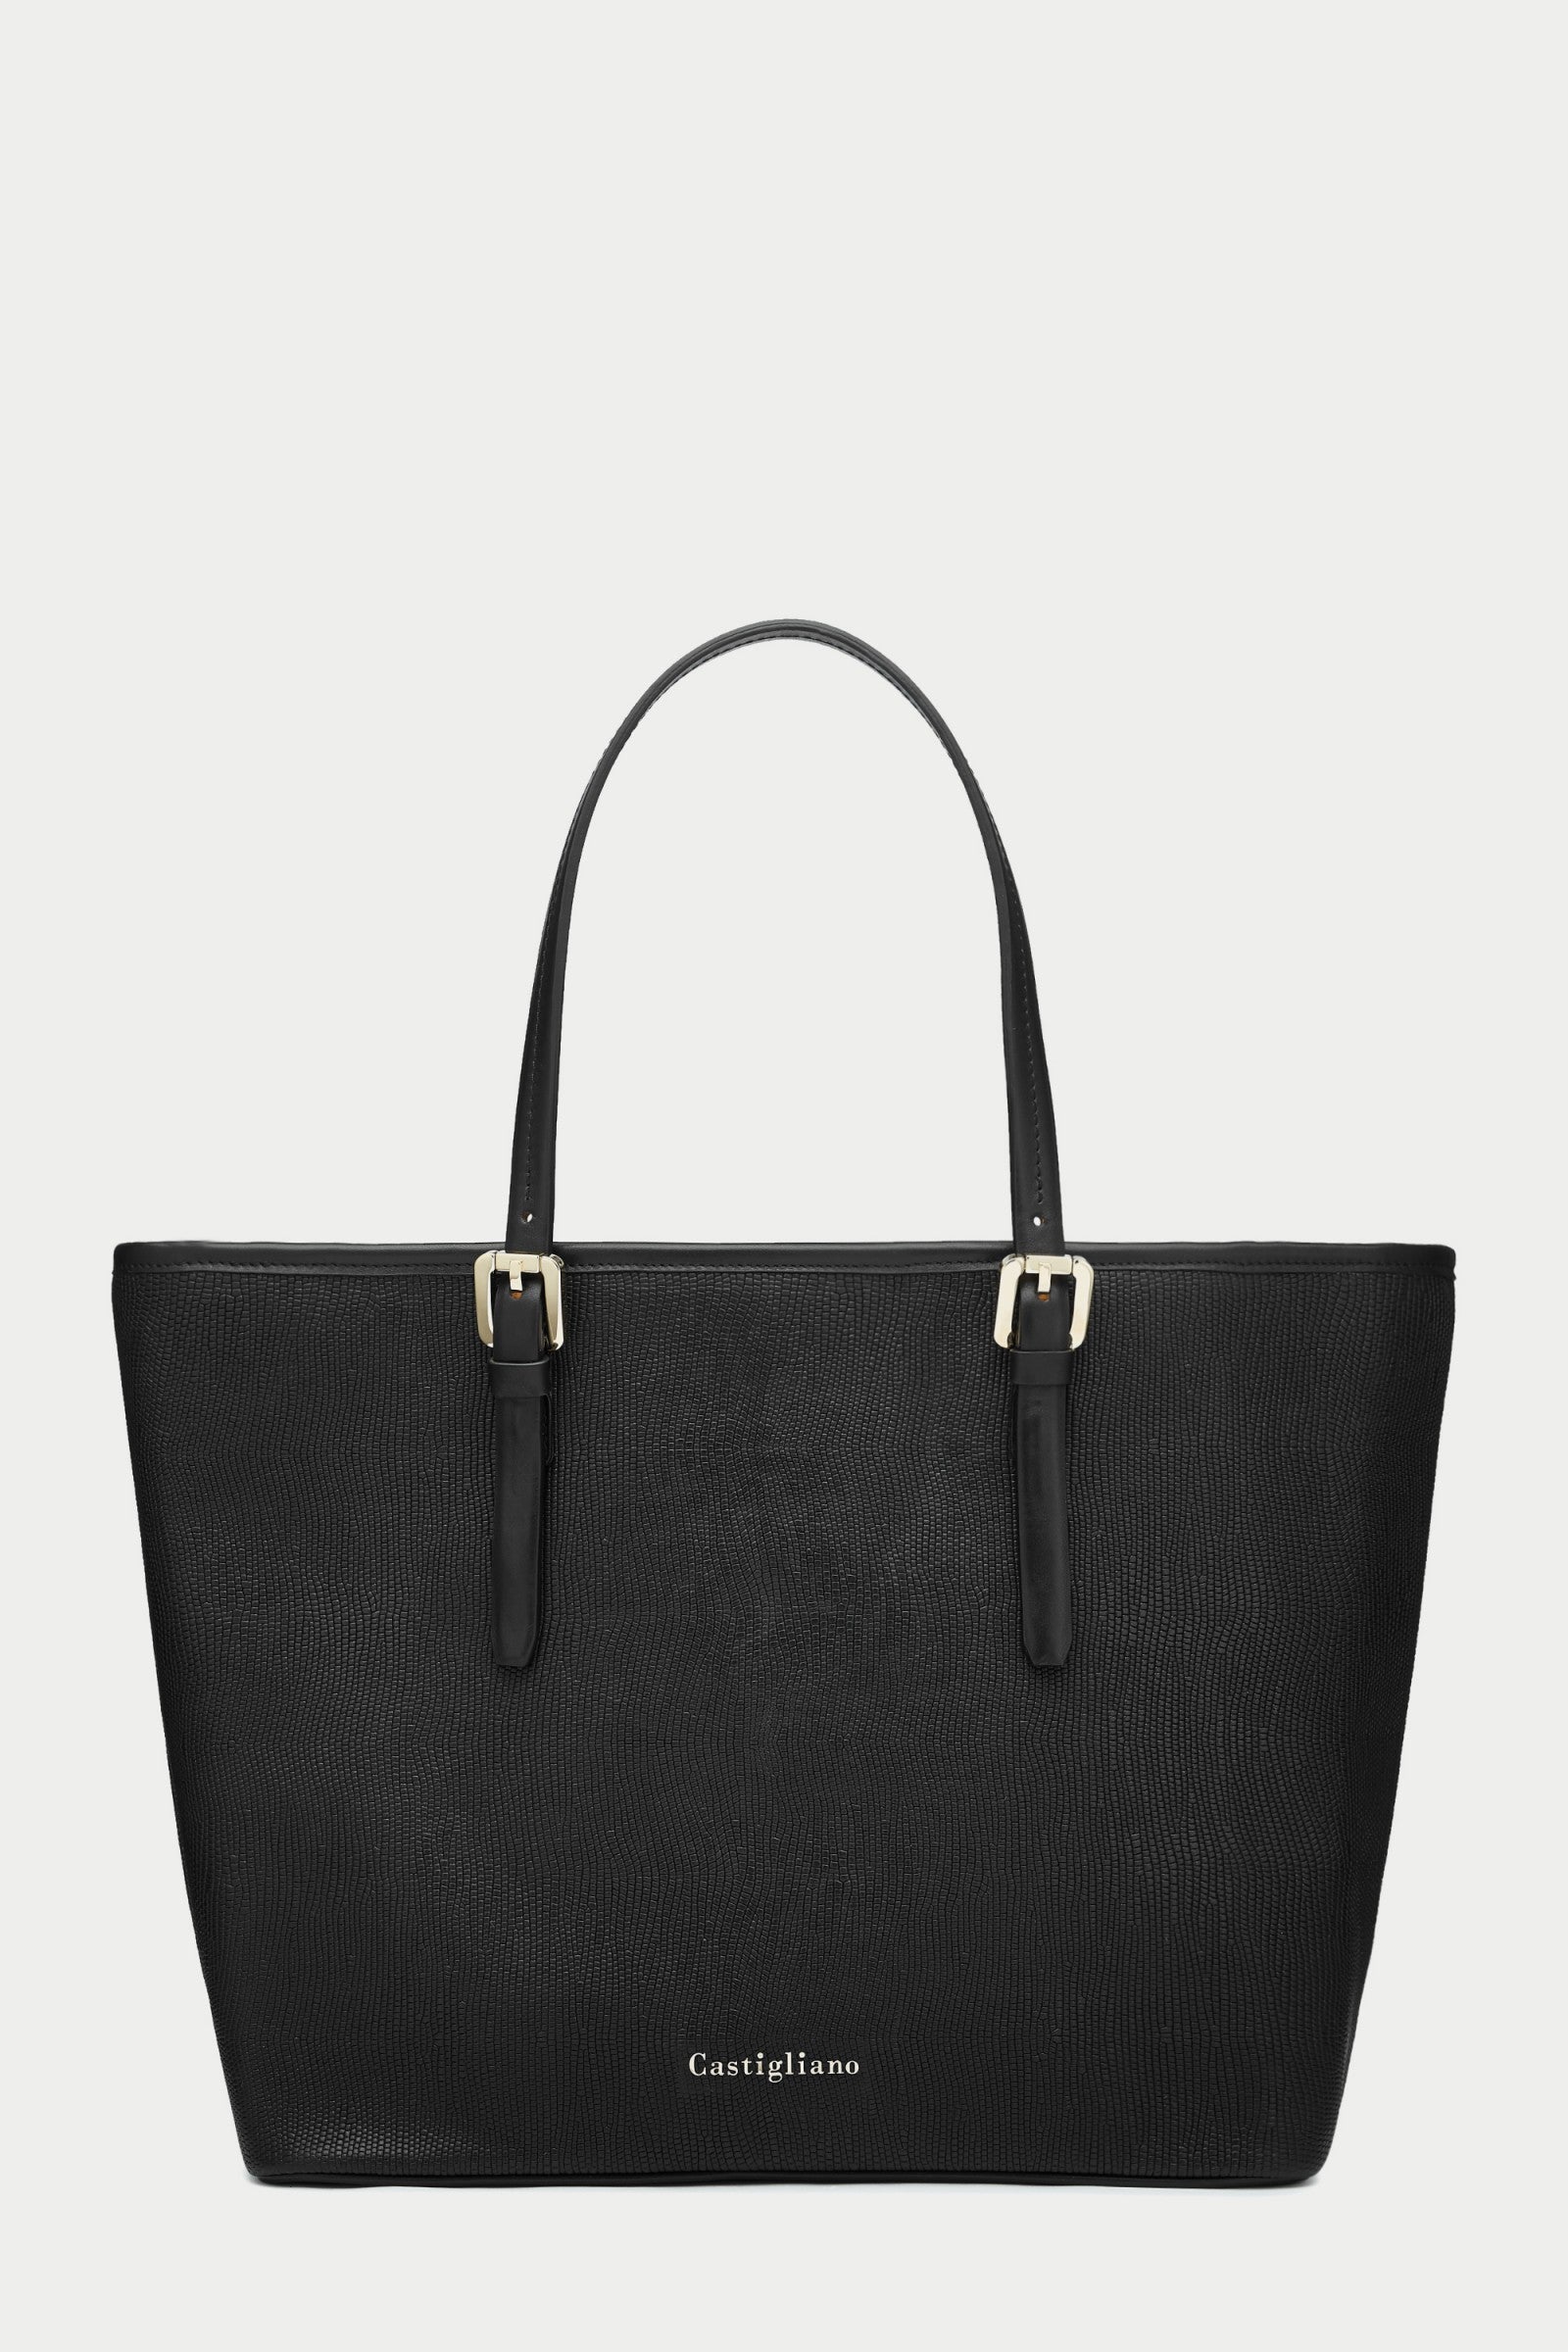 black leather handbags